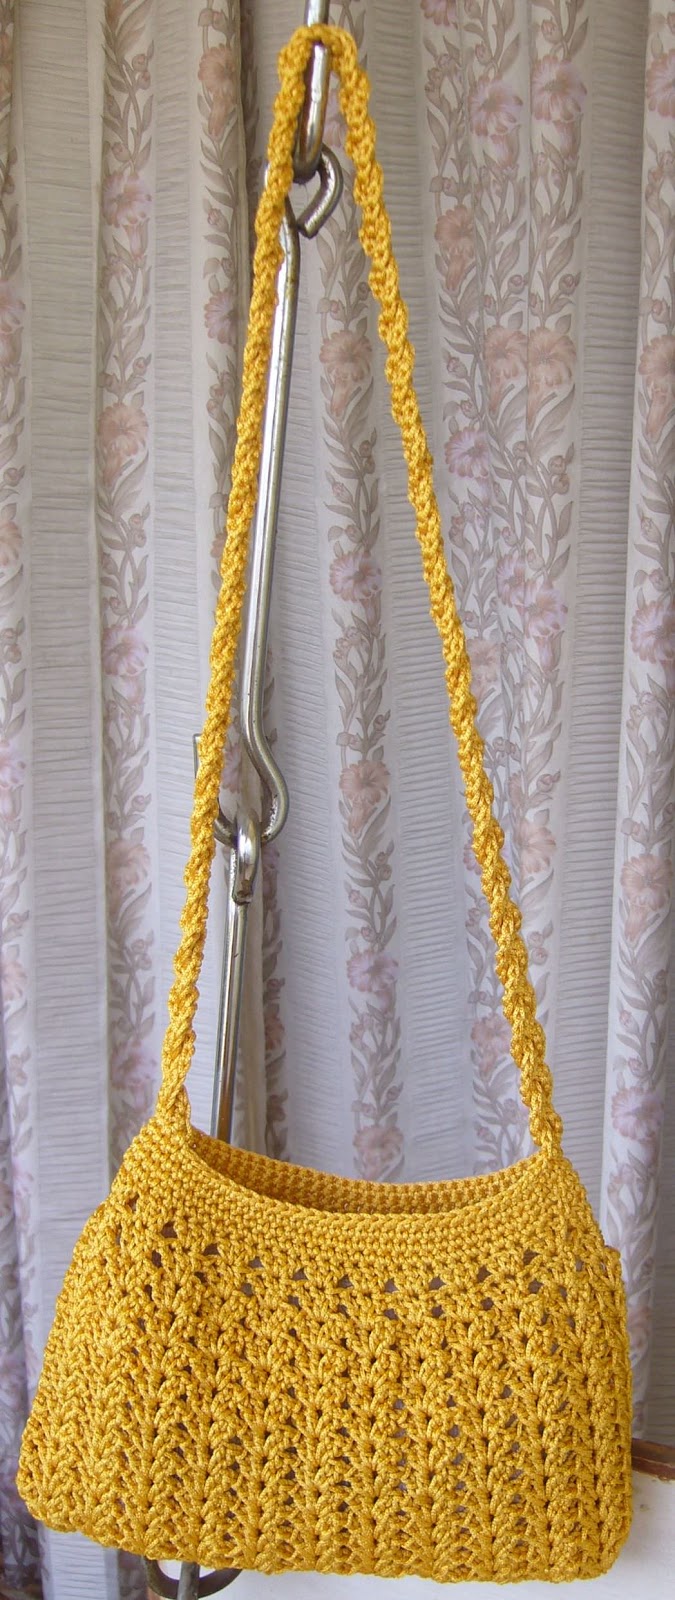 Crochetkari: Golden yellow crochet purse